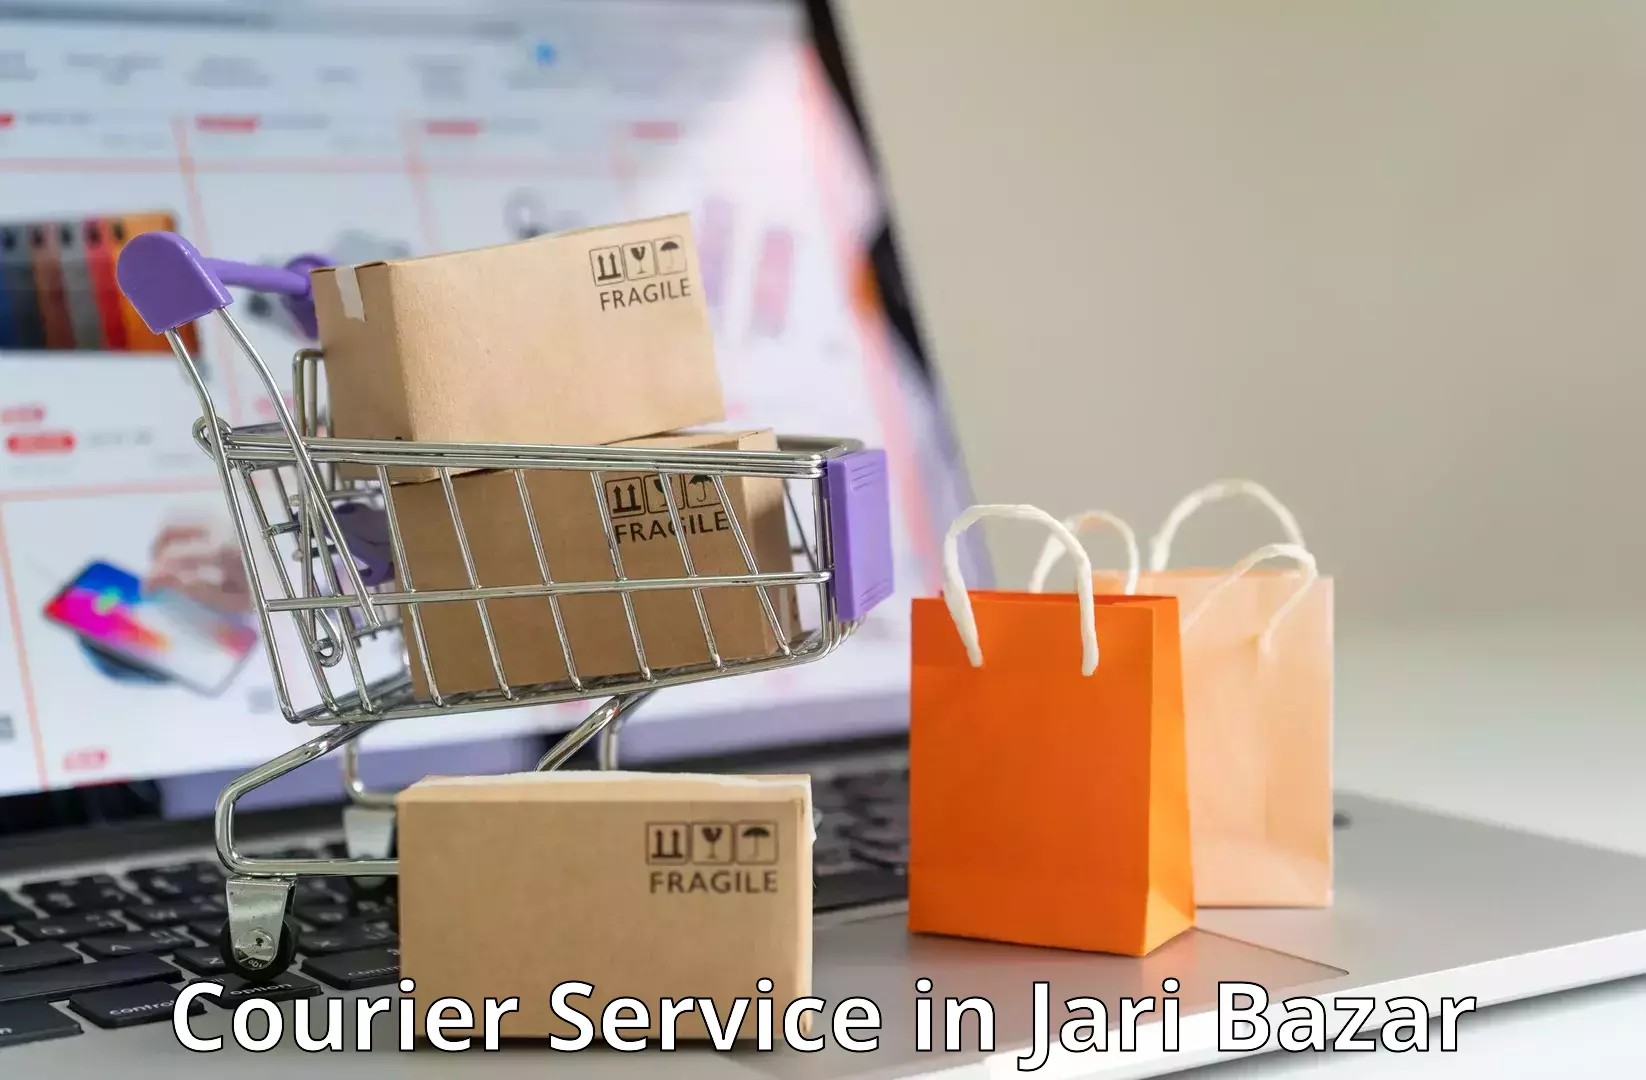 Parcel handling and care in Jari Bazar